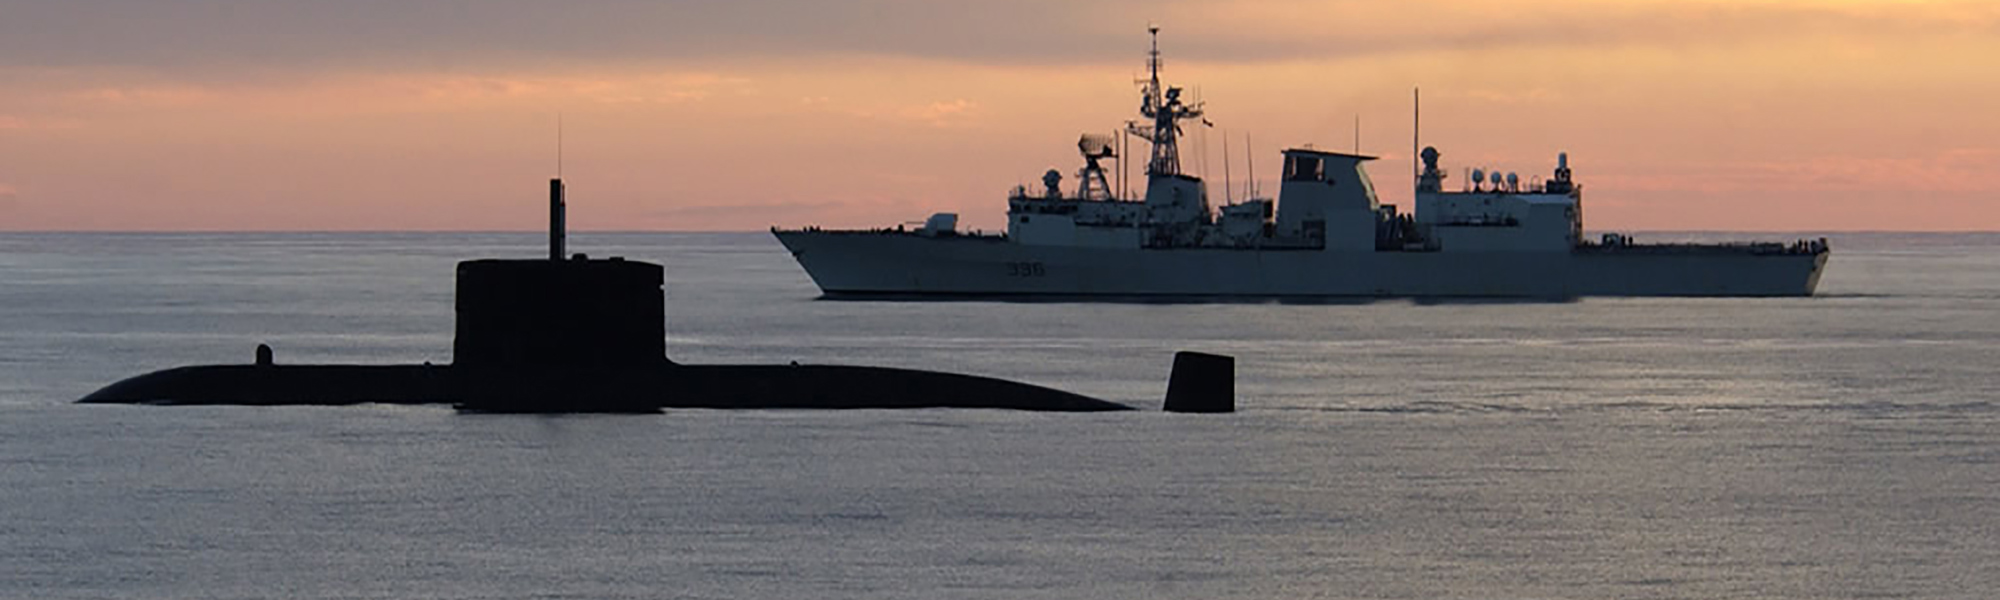 Halifax Class Frigate And Victoria Class Submarine